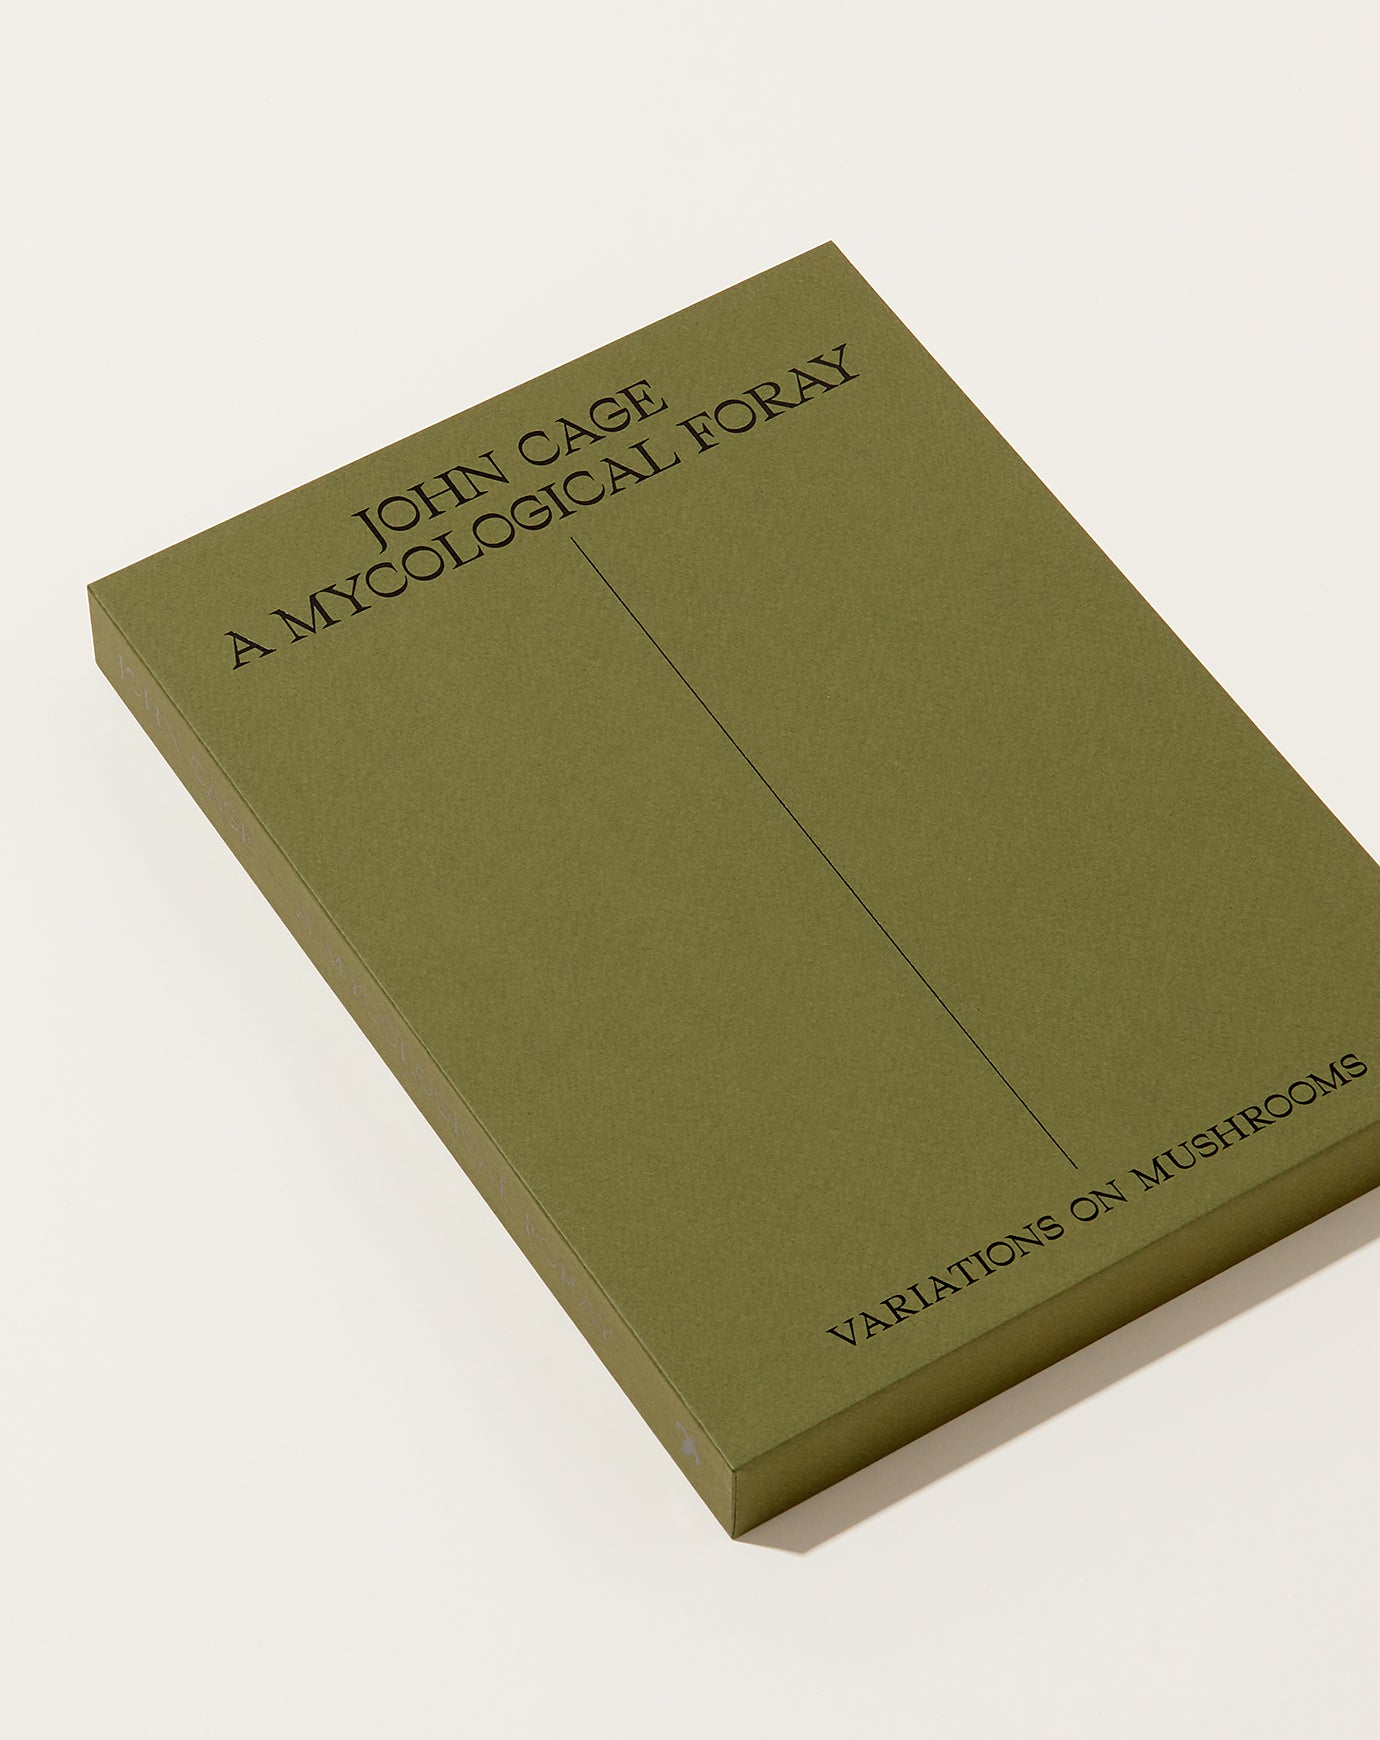 Artbook John Cage: A Mycological Foray